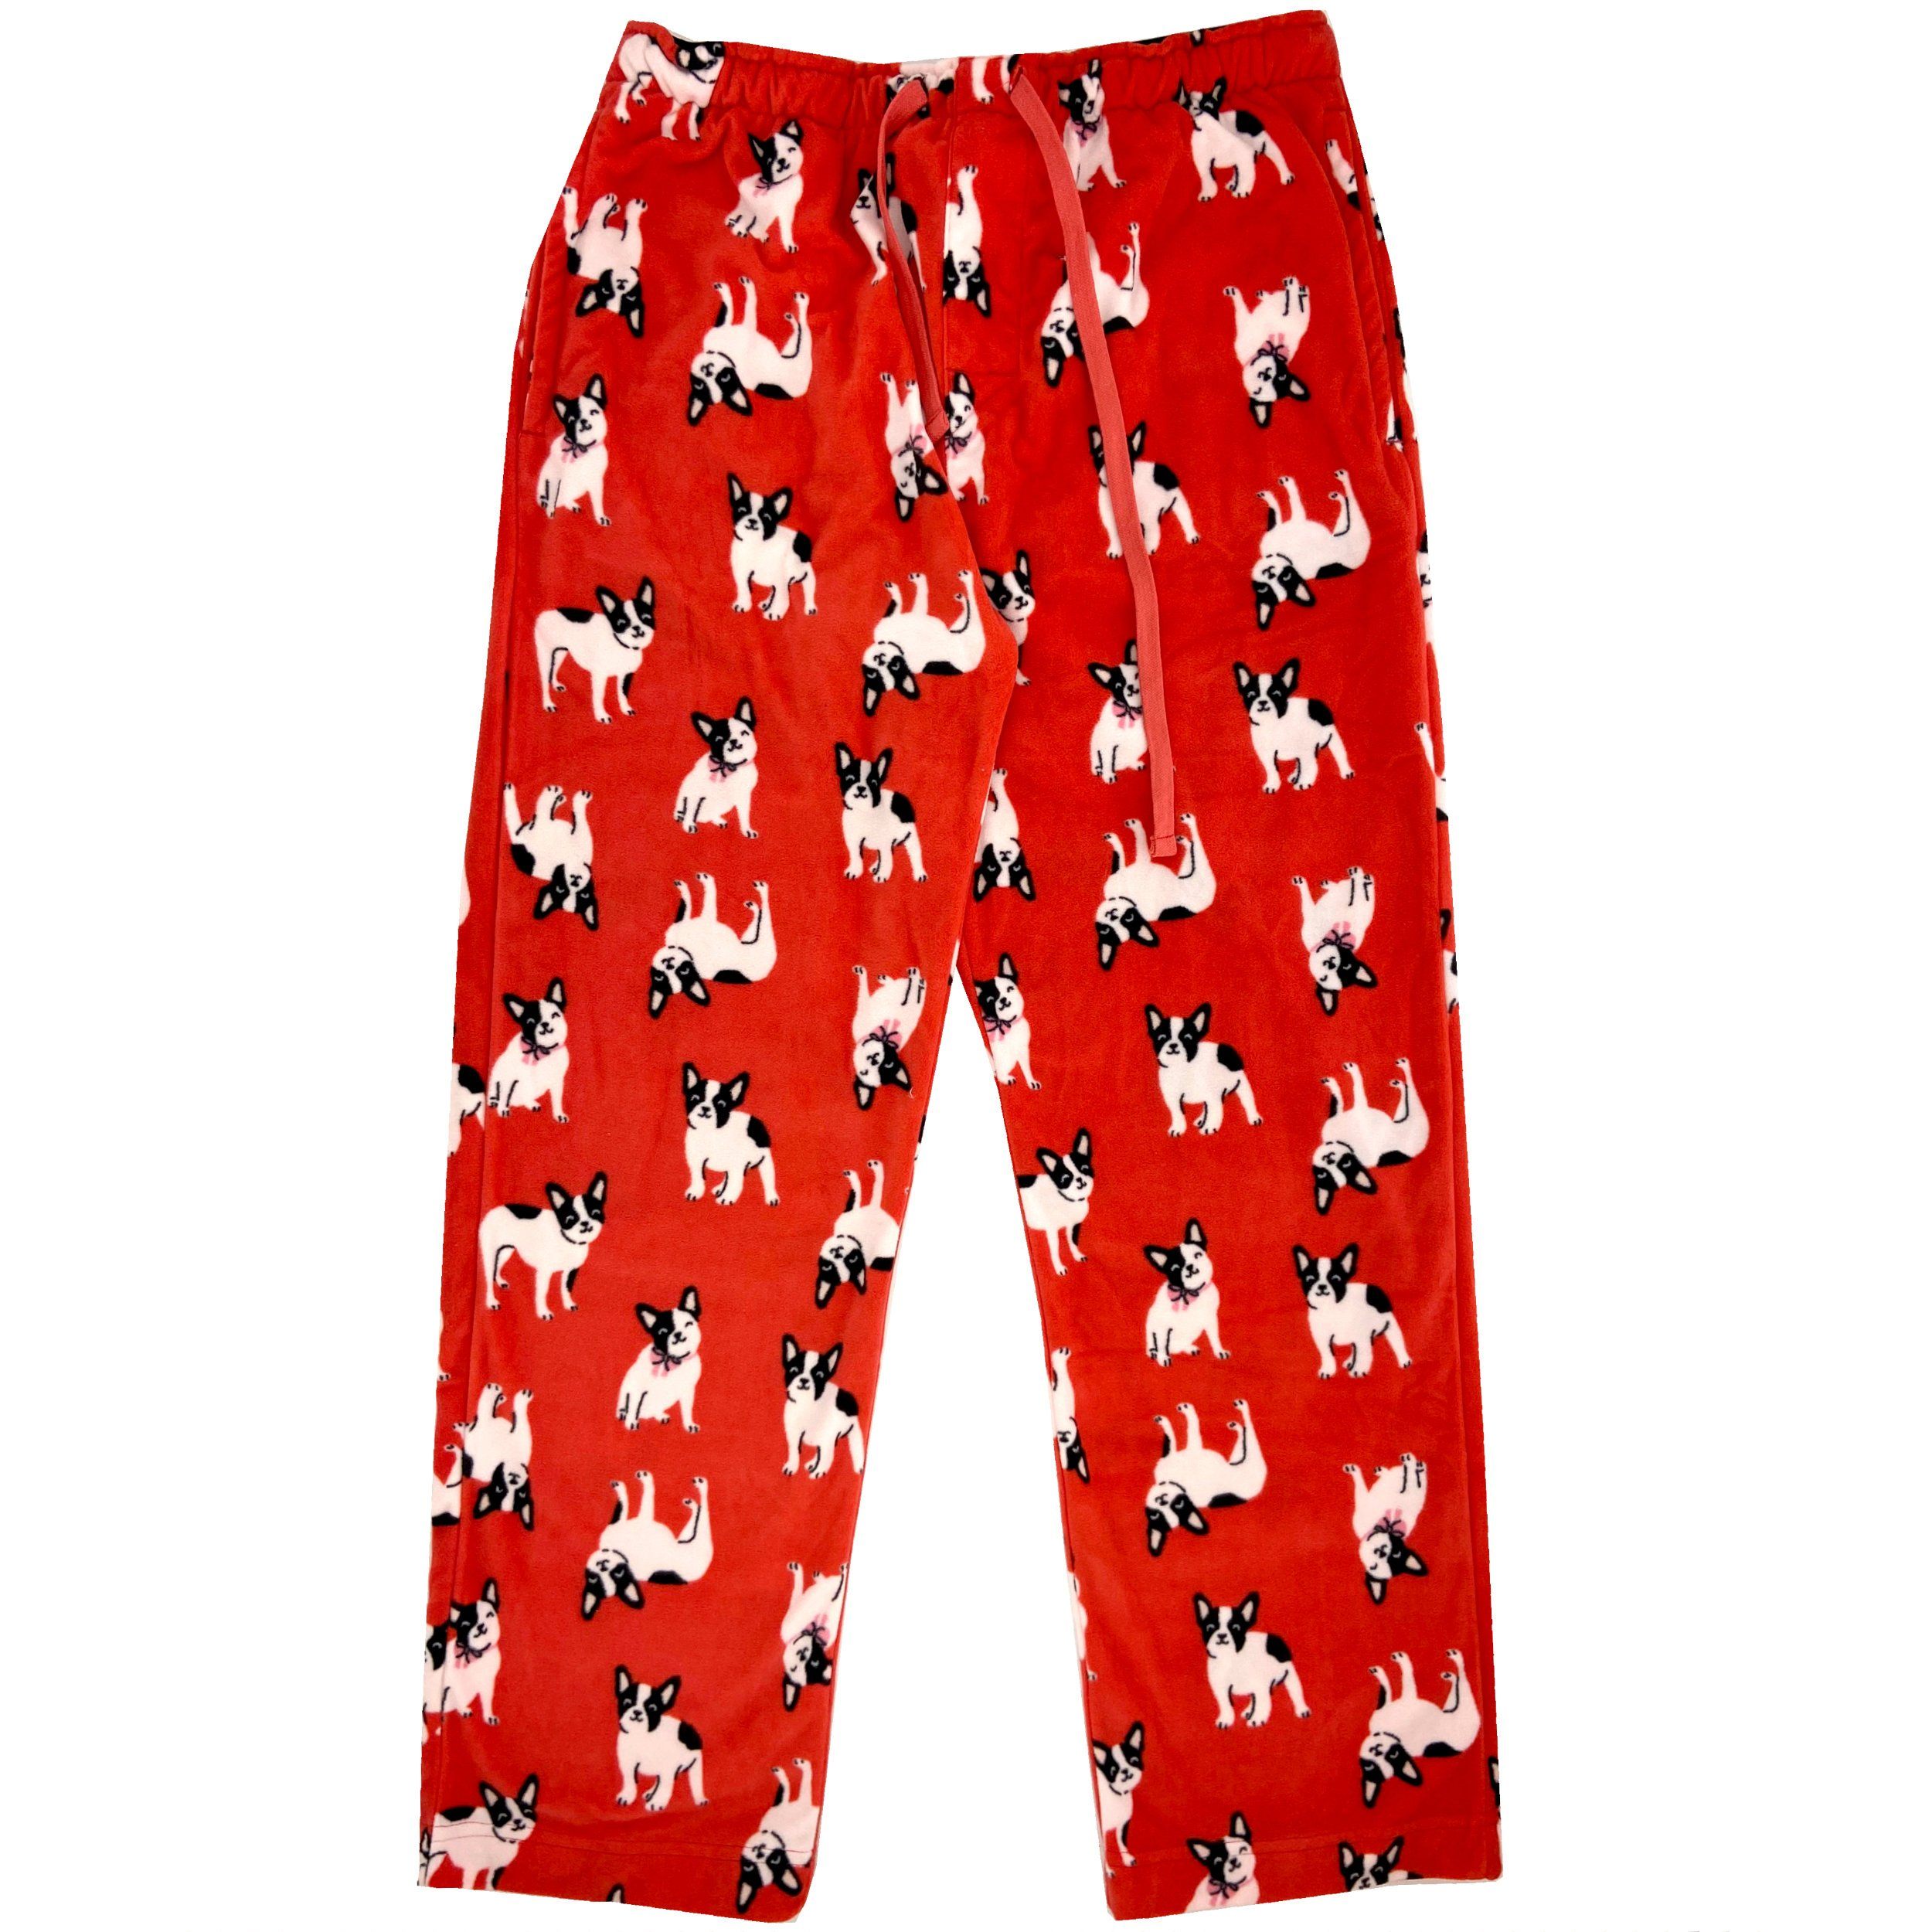 Men's Adult French Bulldog All Over Print Red Fleece Pajama Bottoms